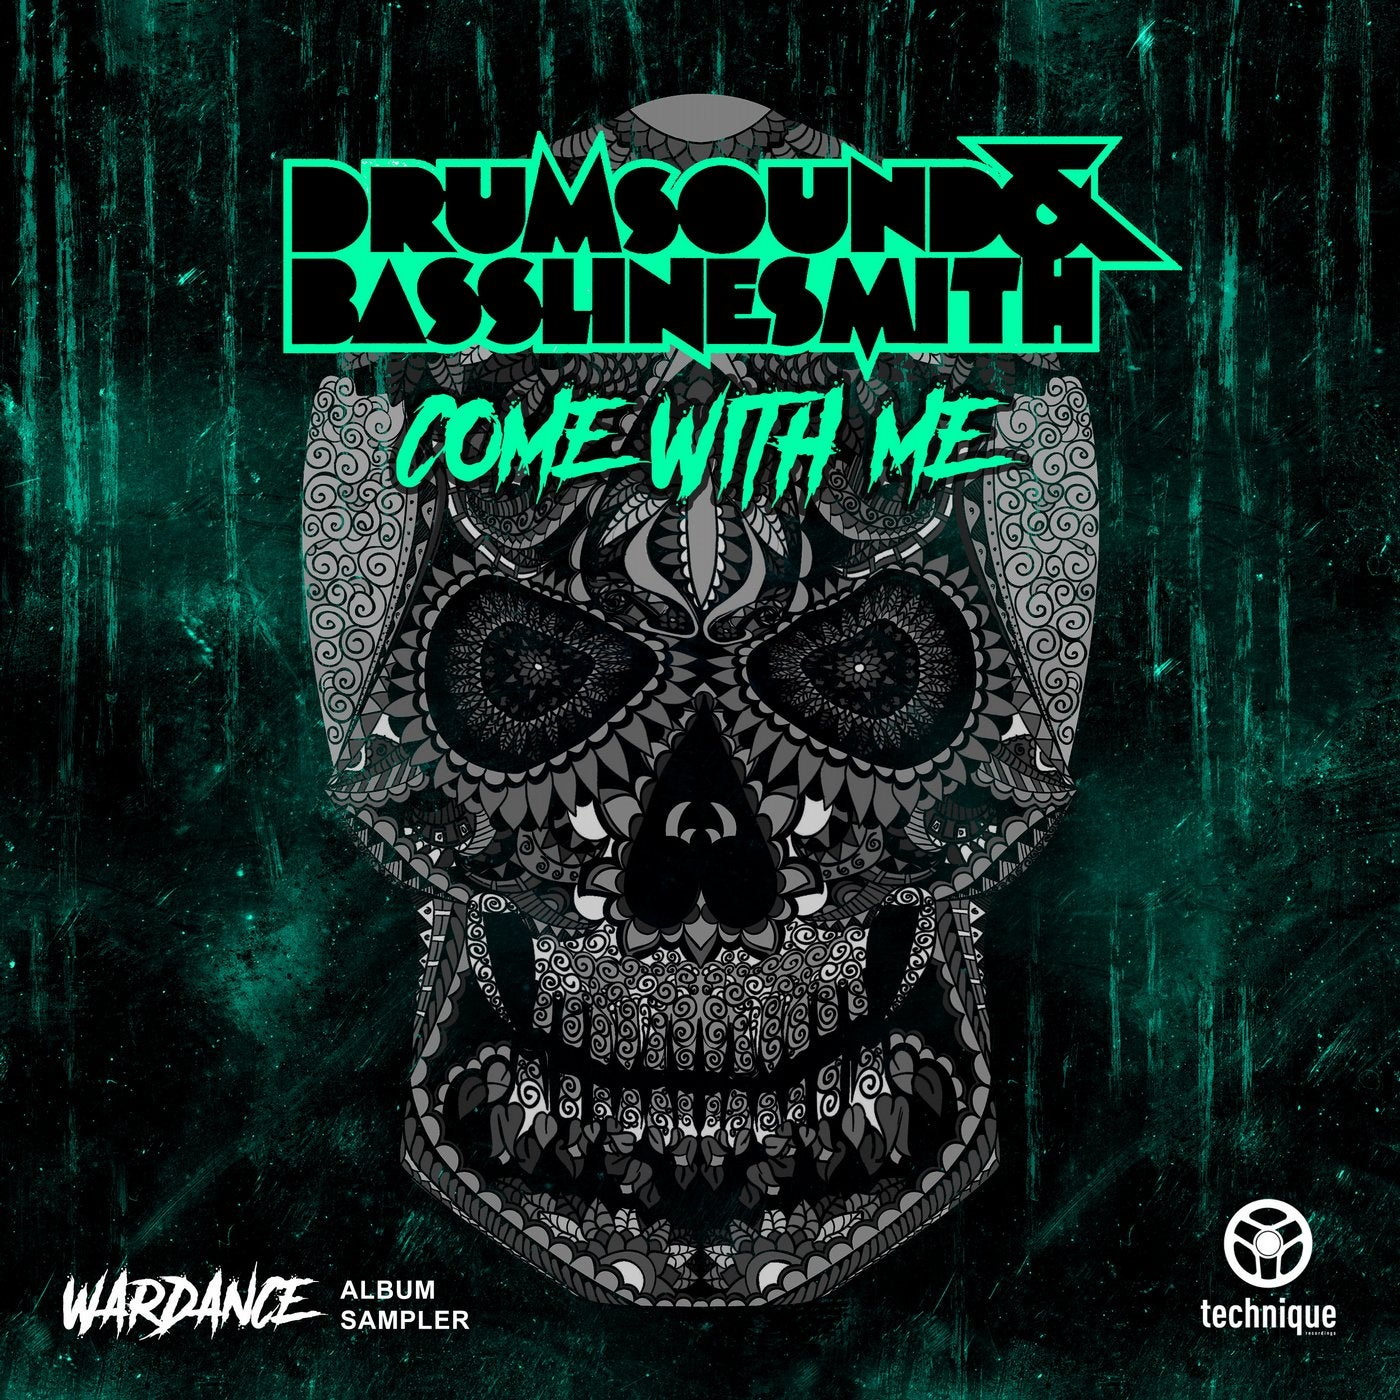 Drumsound & Bassline Smith - Come With Me (Wardance Album Sampler)